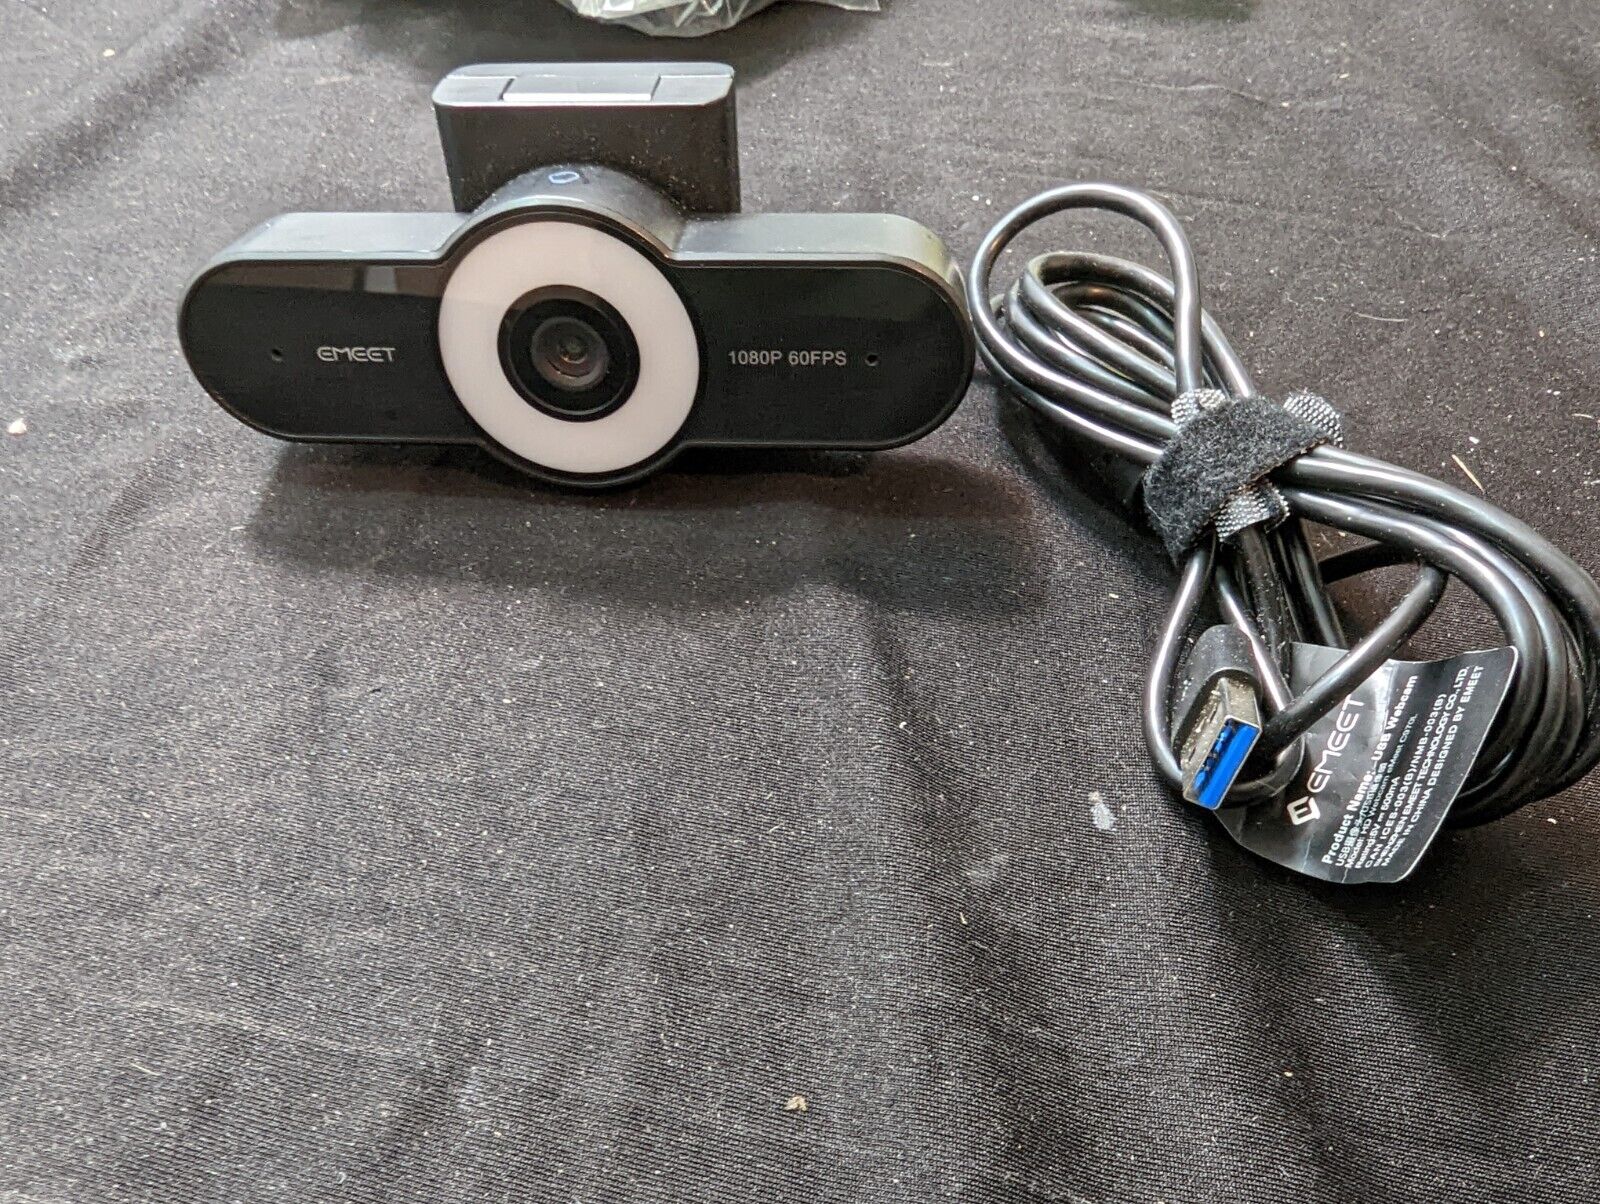 lot of 10 EMEET 1080P60FPS Webcam with Ring Light  Autofocus Streaming WebCamera